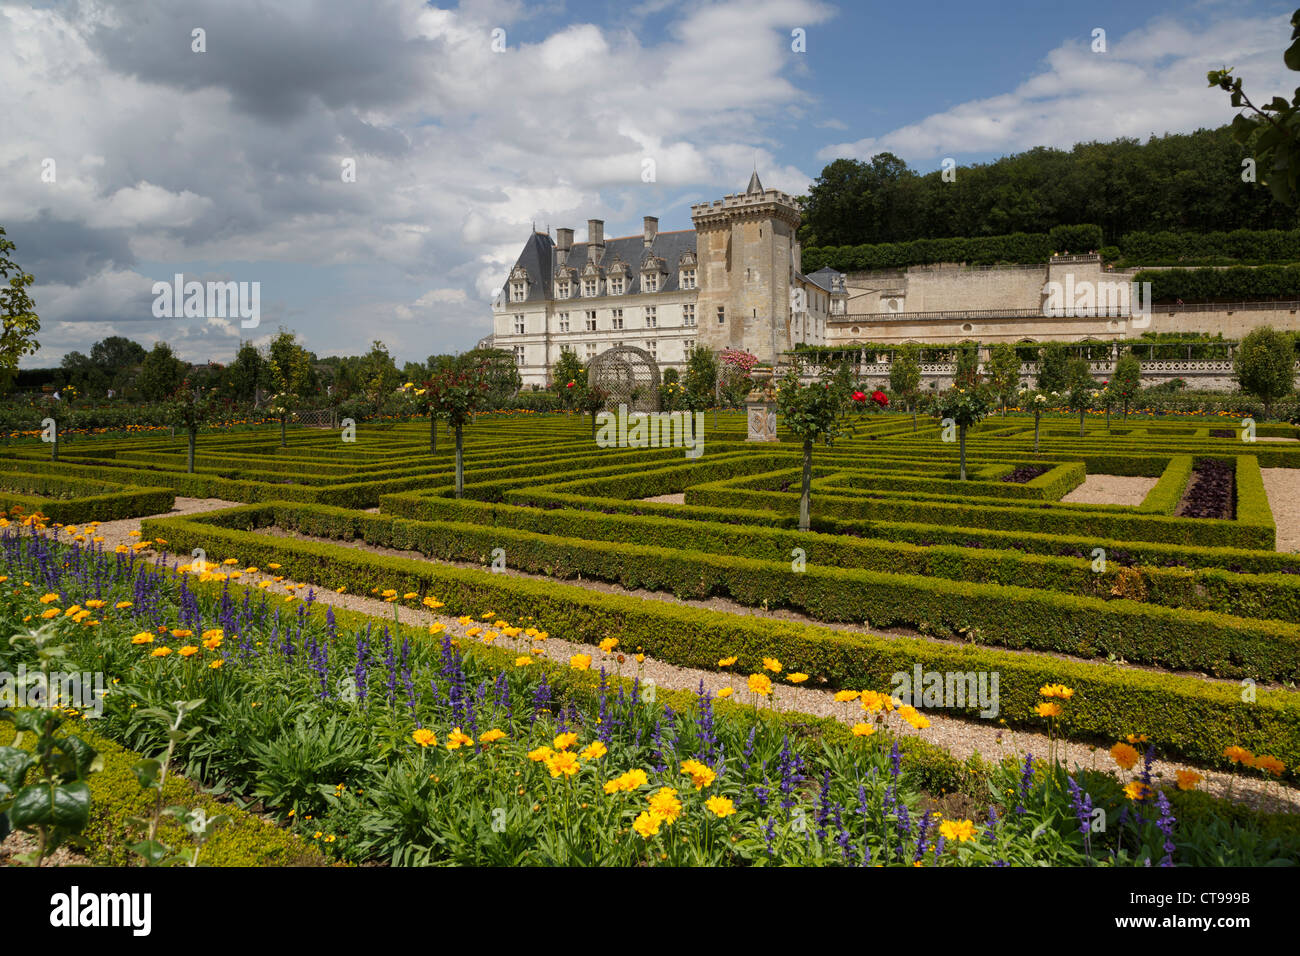 Chateau de Villandry, Loire Valley, France. Late renaissance chateau famous for its restored gardens. Stock Photo